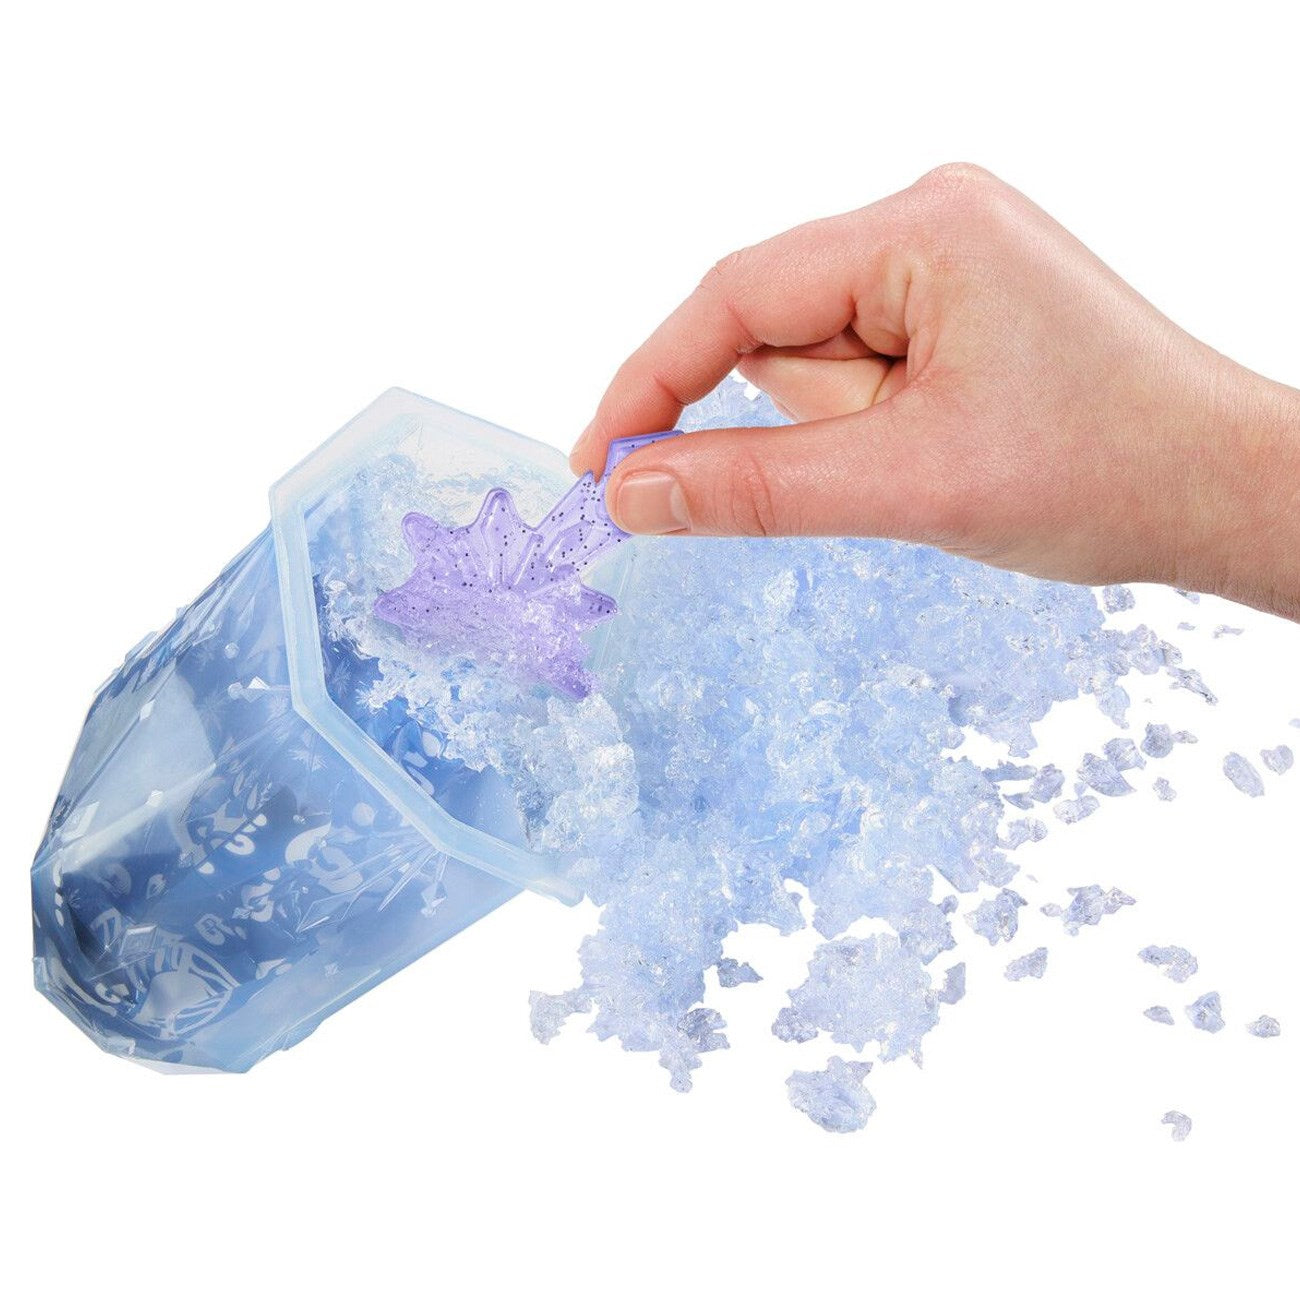 Disney Frozen Small Doll Slushy Ice Reveal 2